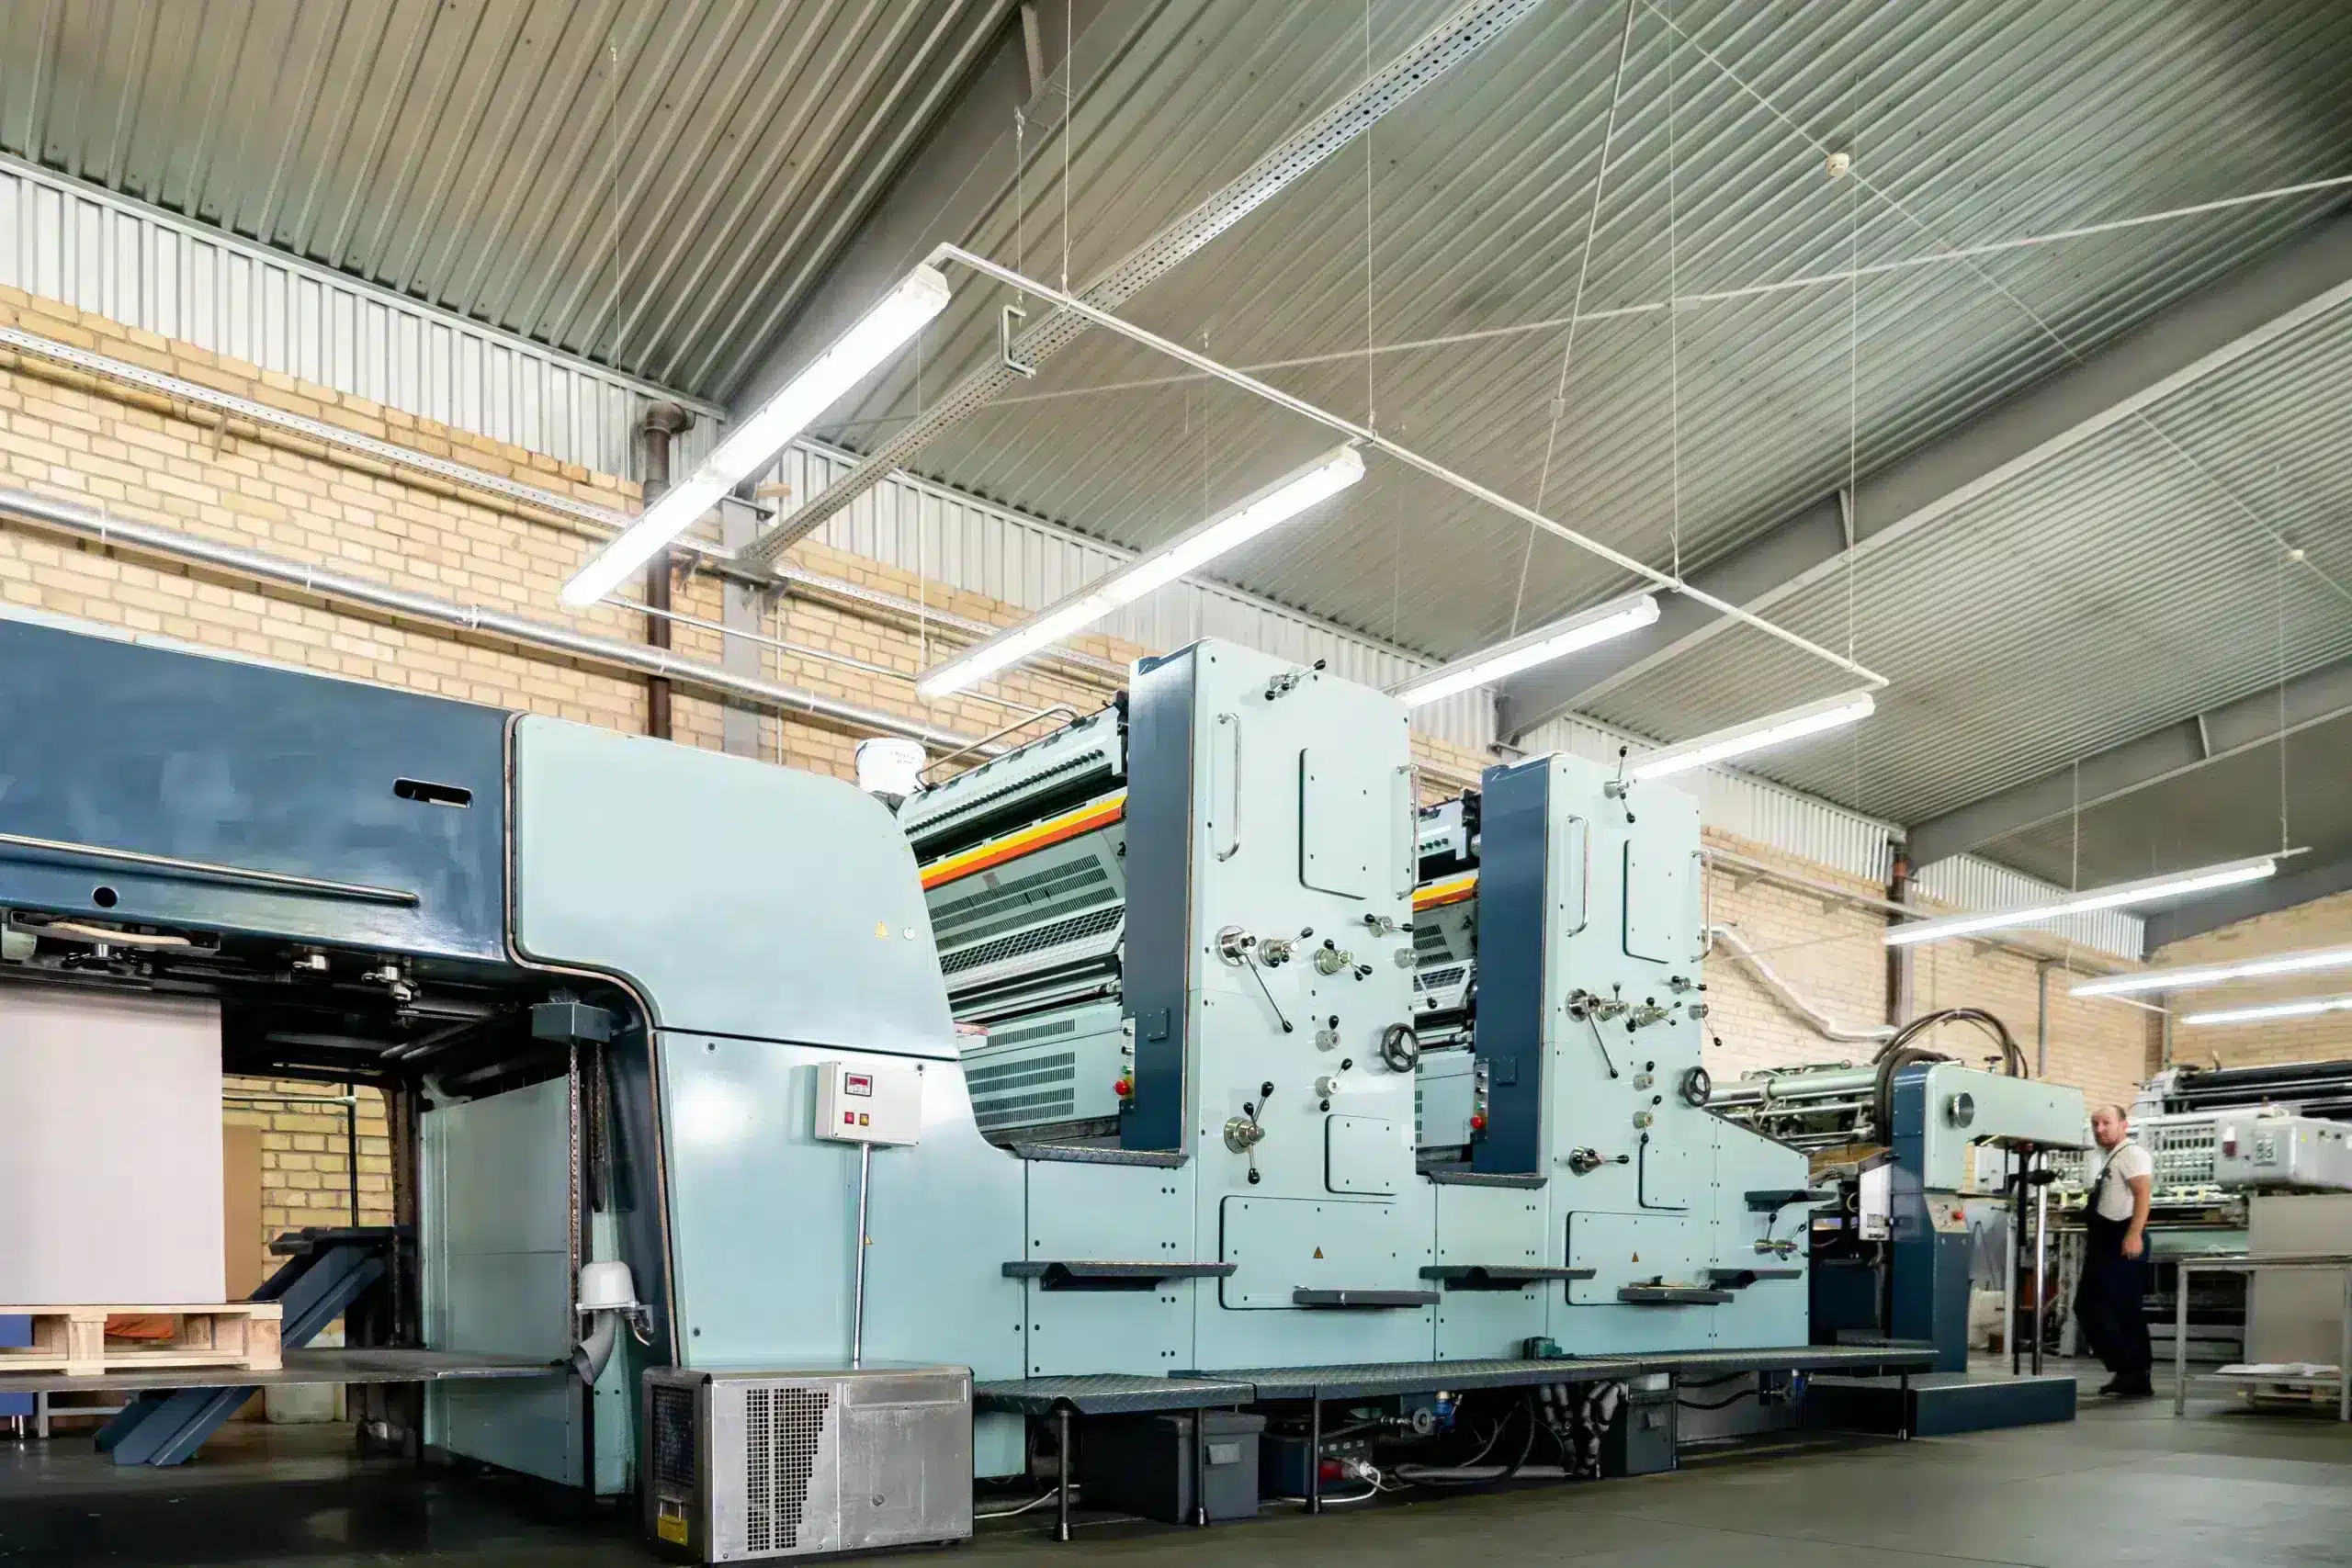 press printing printshop offset machine offset press printing machine designed produce reproductions scaled 1